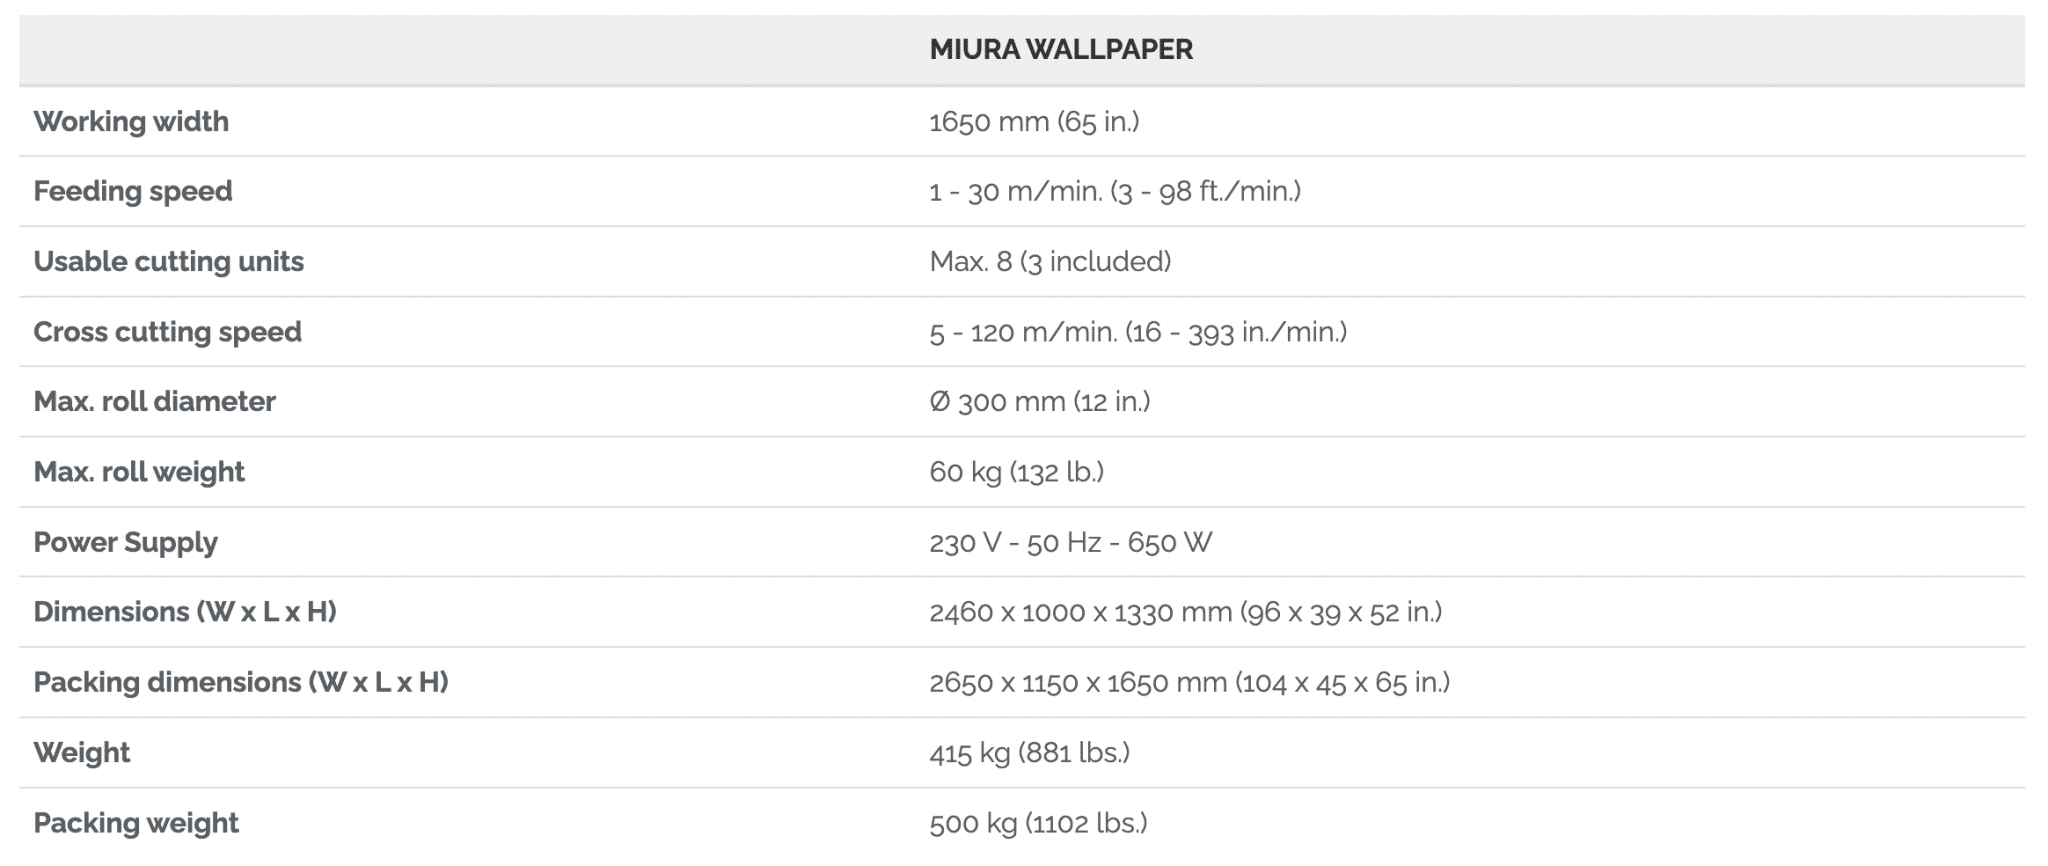 Flexa Miura Wallpaper WALLPAPER DATASHEET vikiallo